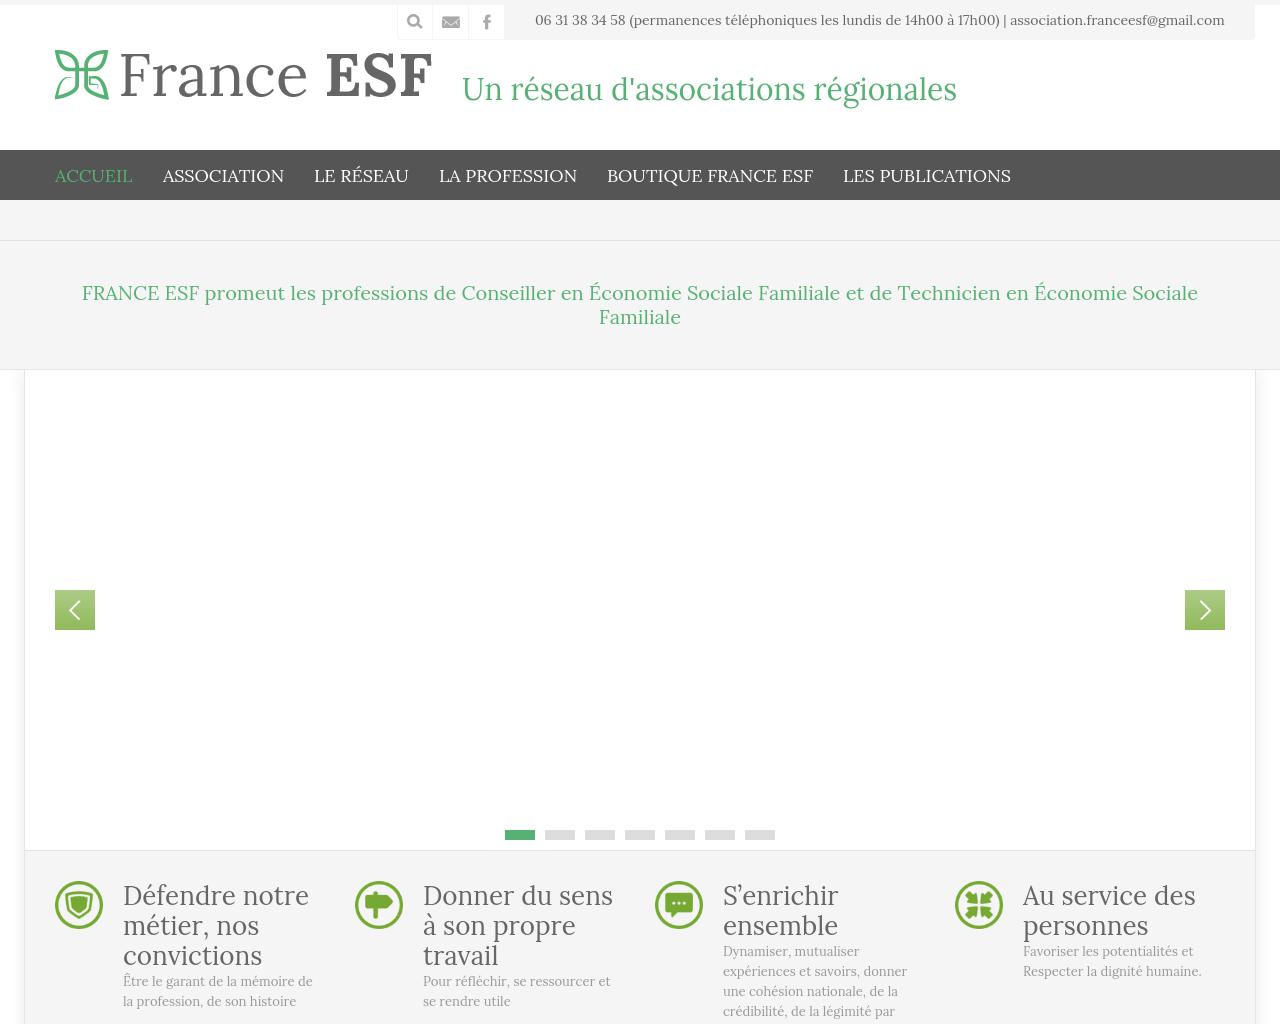 France ESF